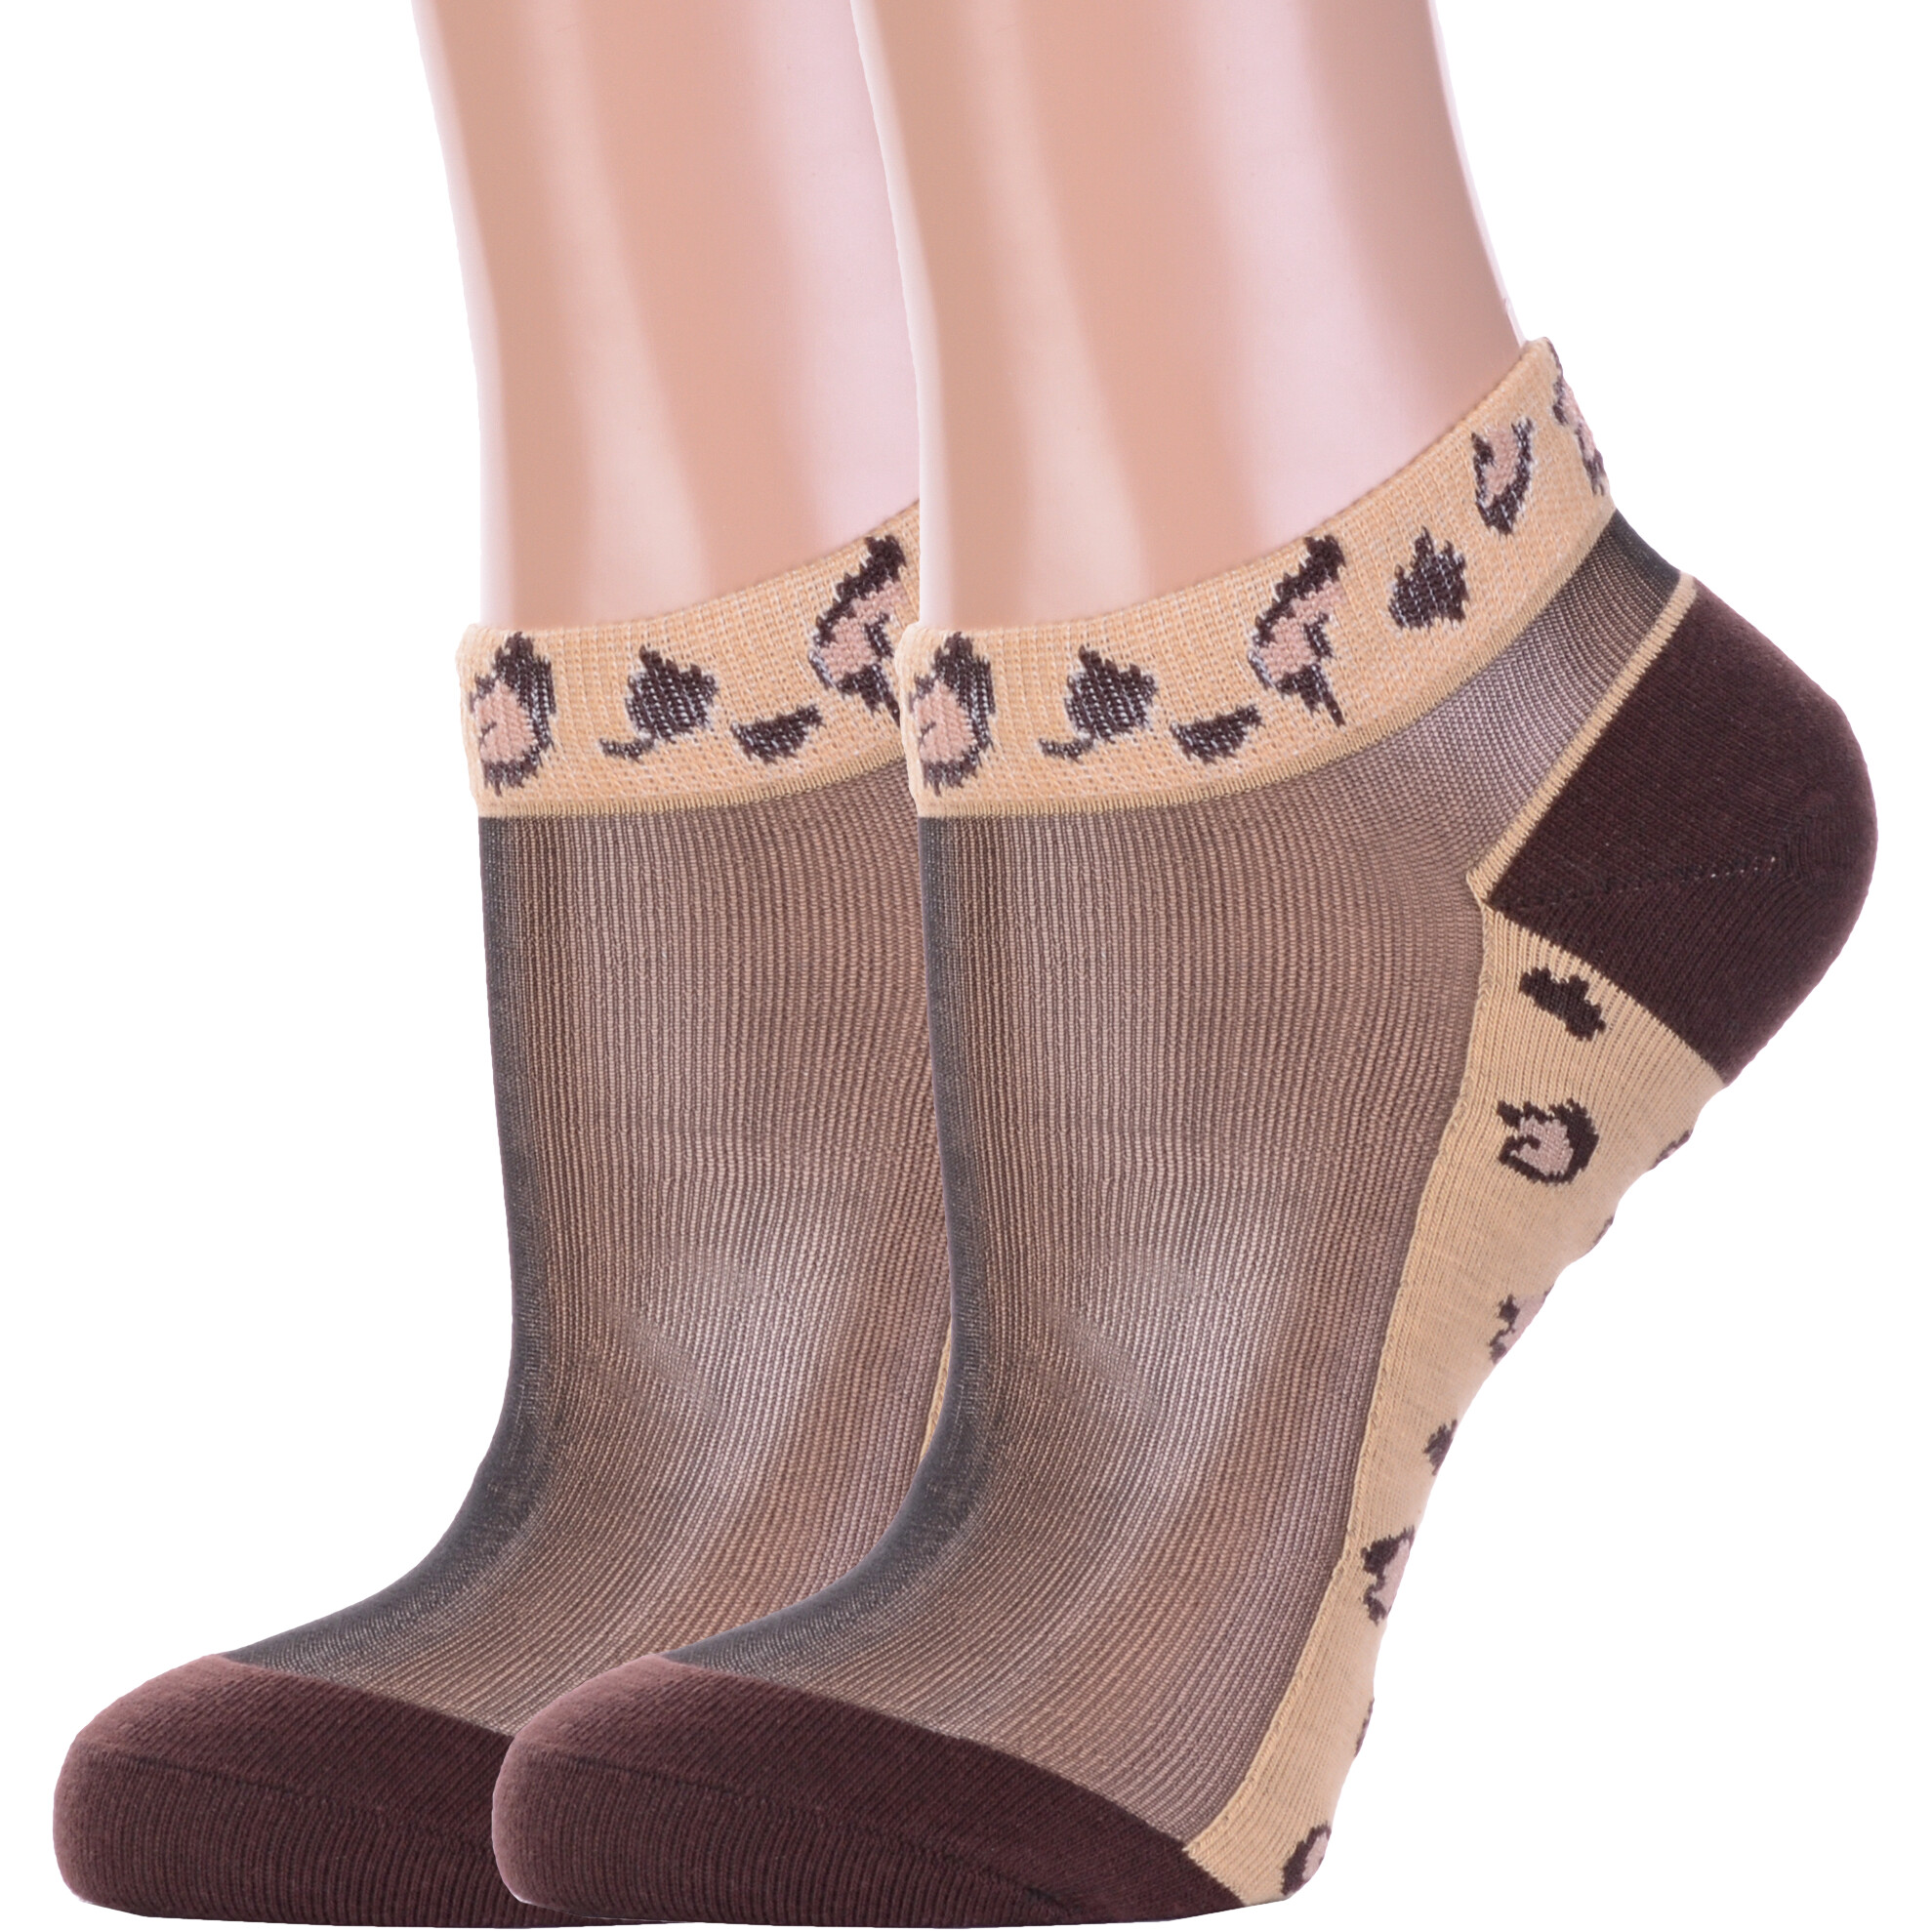 Комплект носков женских Hobby Line 2-нжсту2563-6 коричневых 36-40, 2 пары